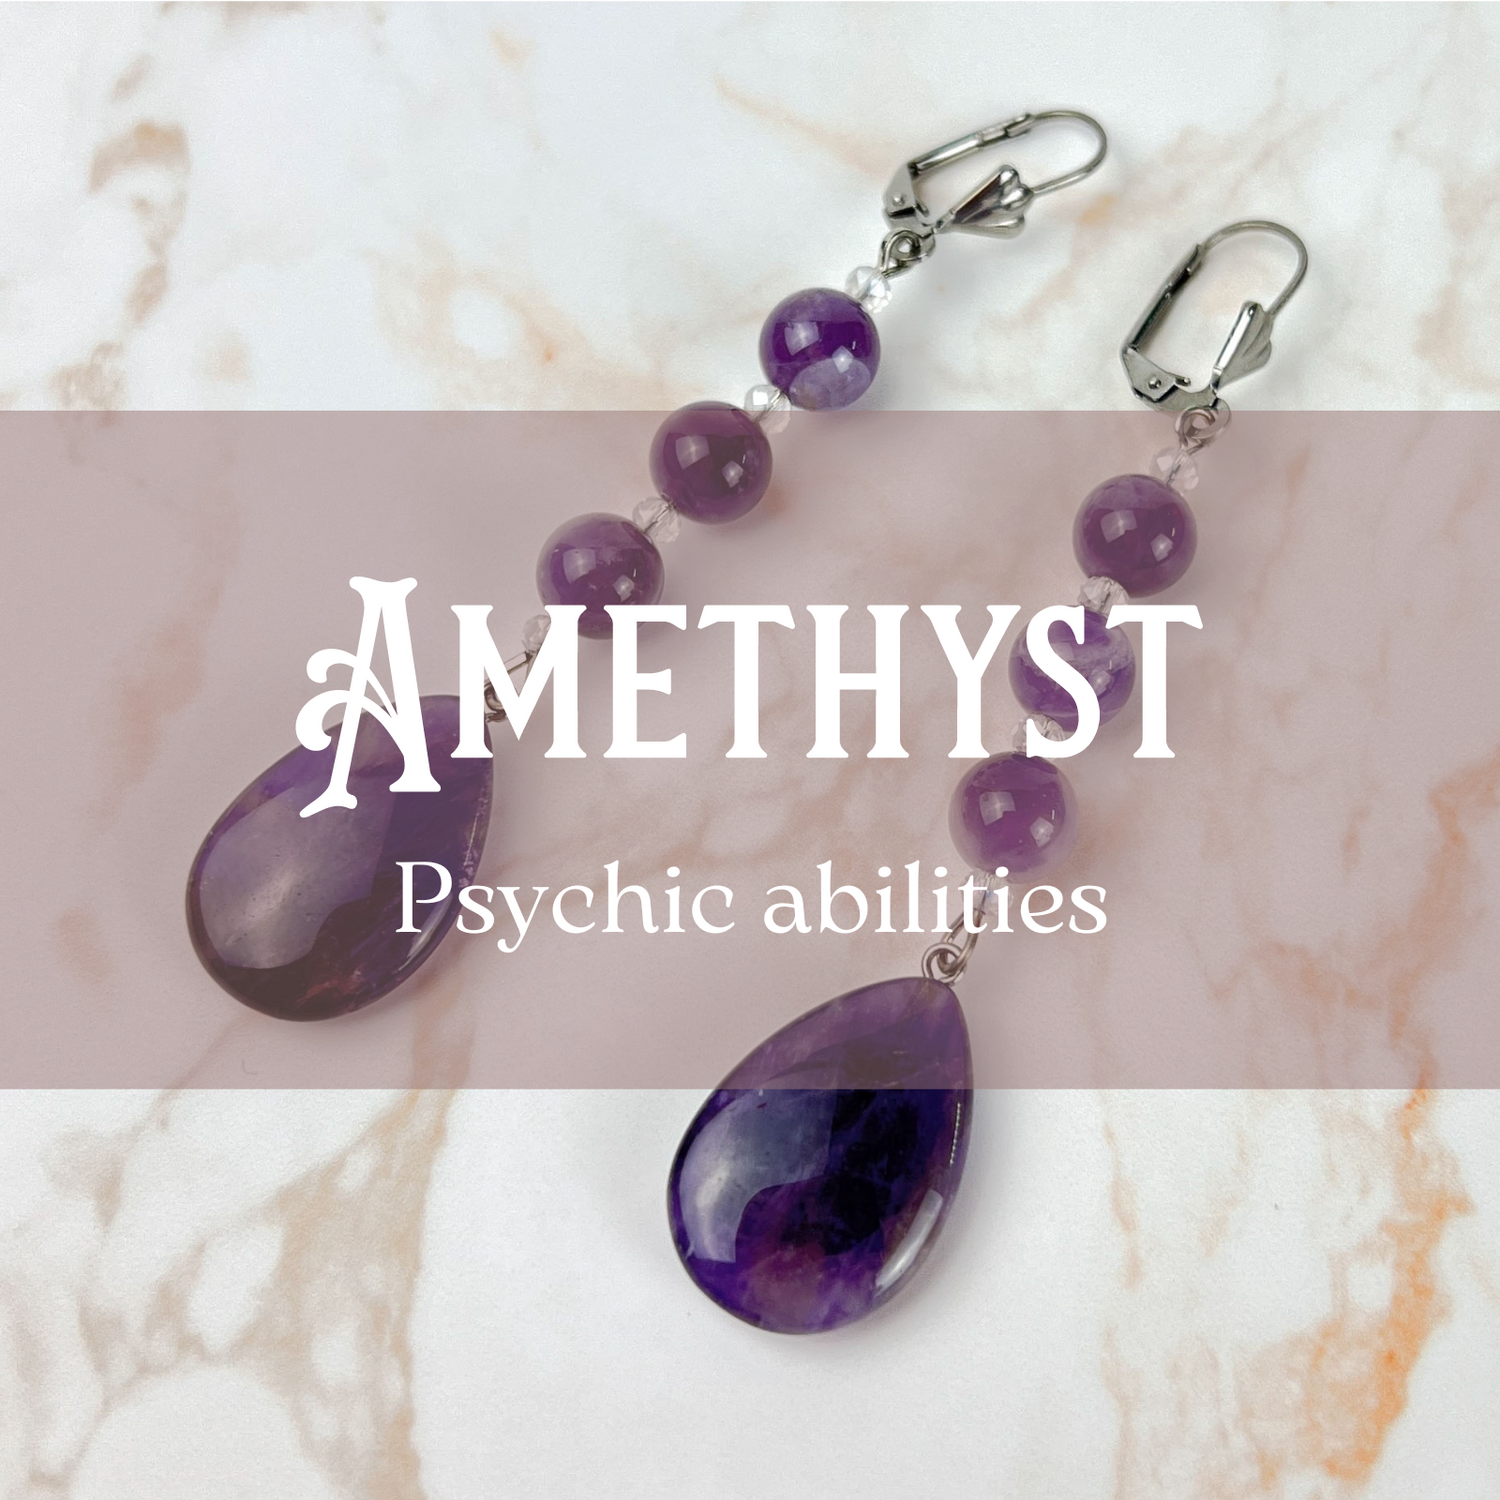 Amethyst jewelry